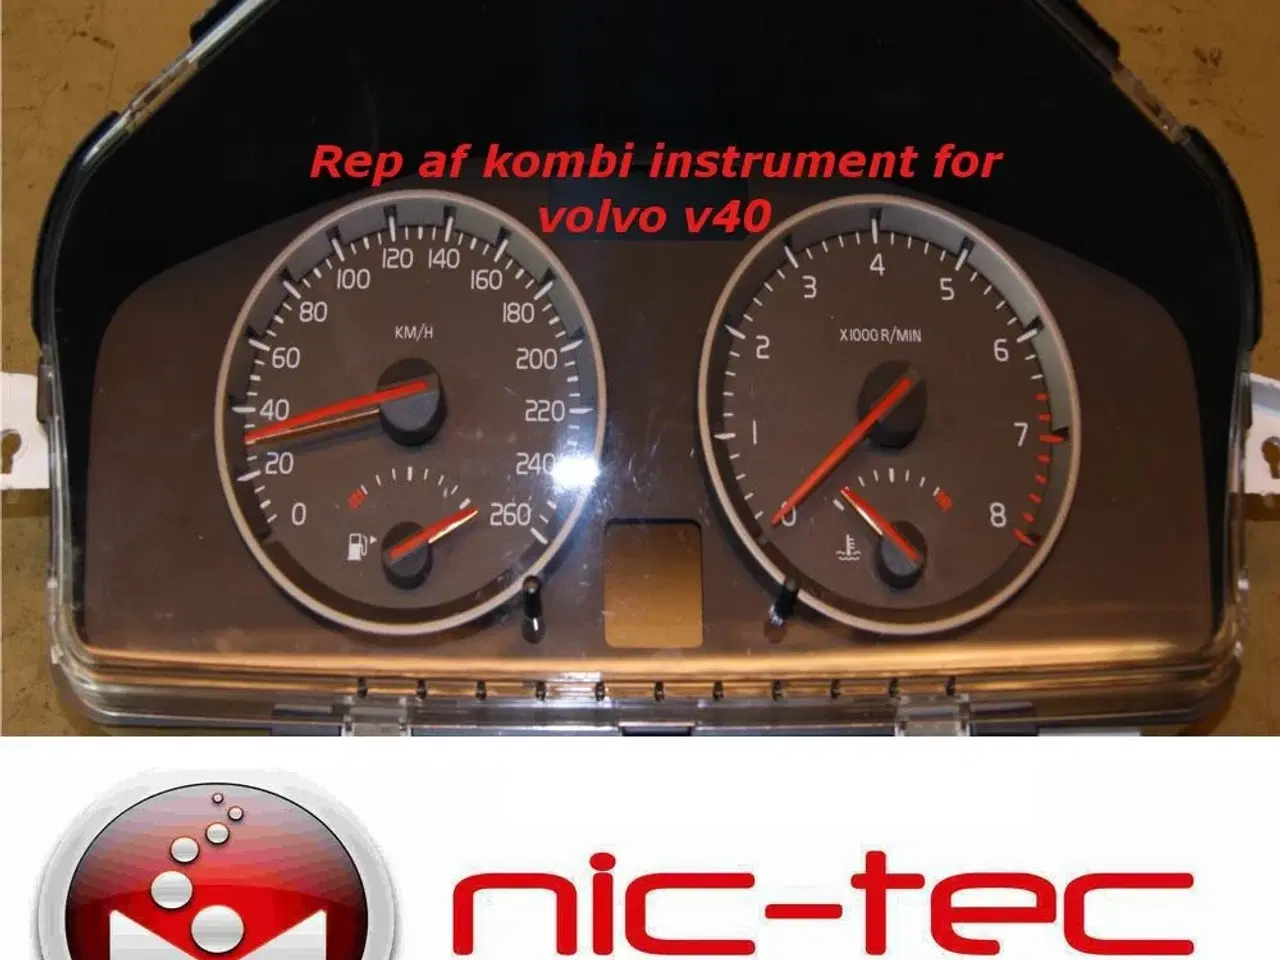 Billede 1 - Volvo V40 Speedometer / Kombi instrument rep